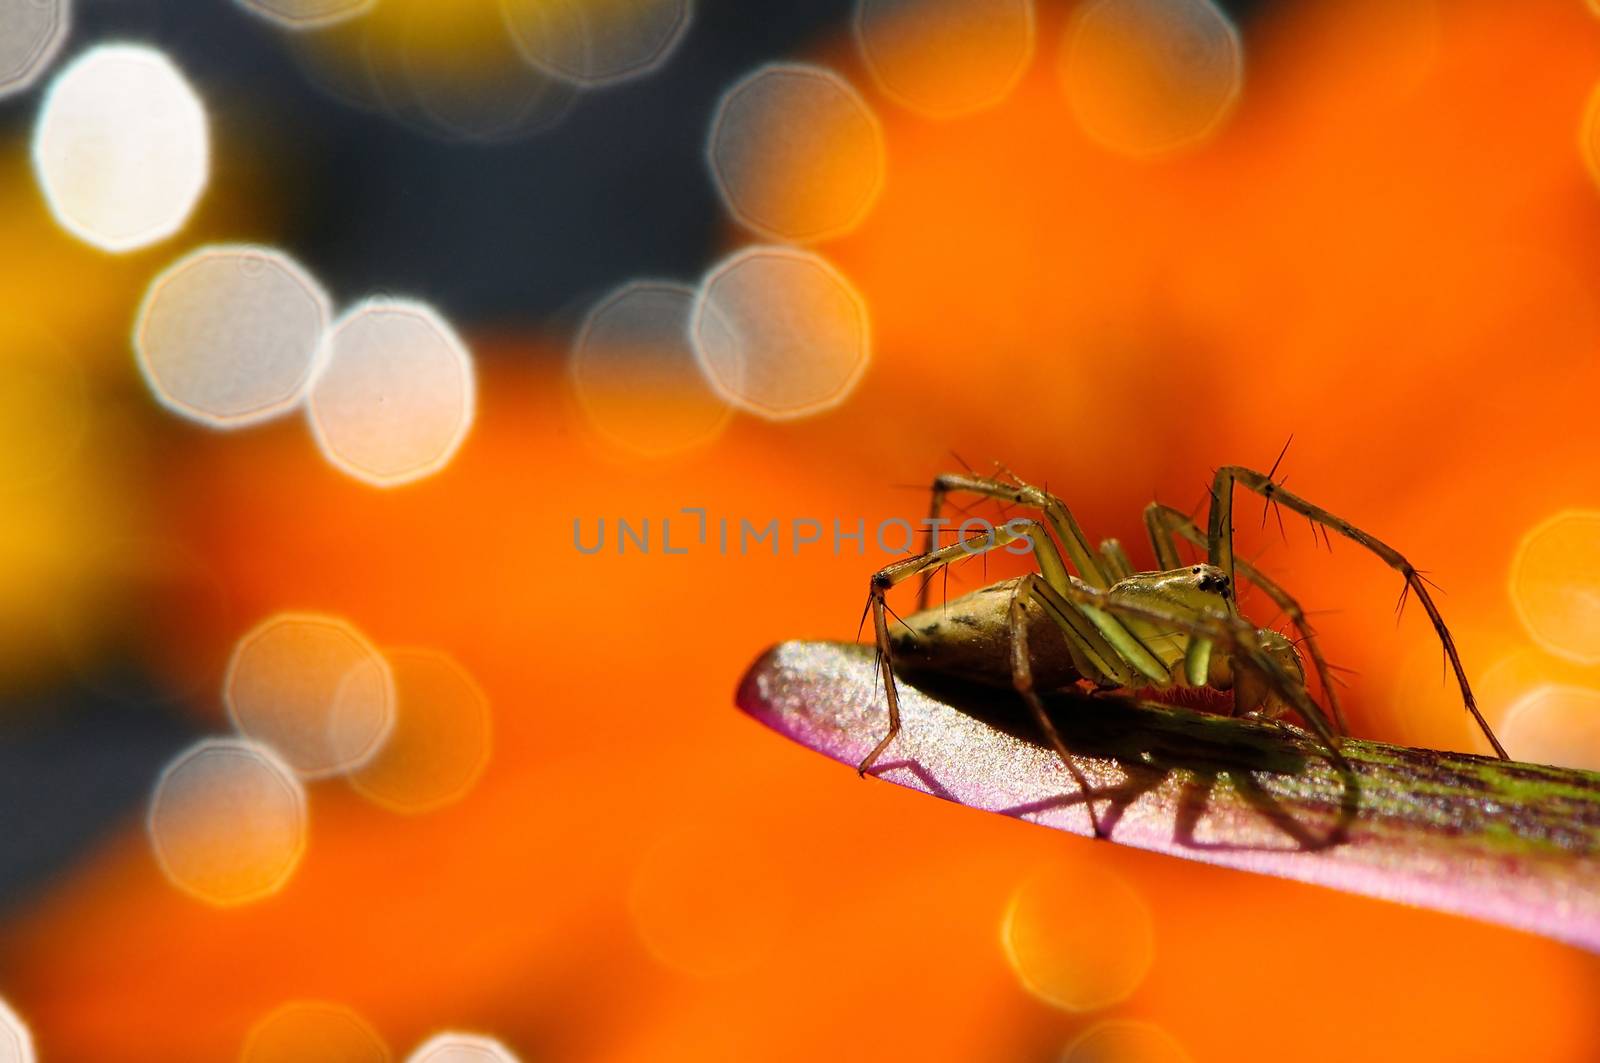 Spider close-up on lotus leaf is taken picture above a pond on orange background.